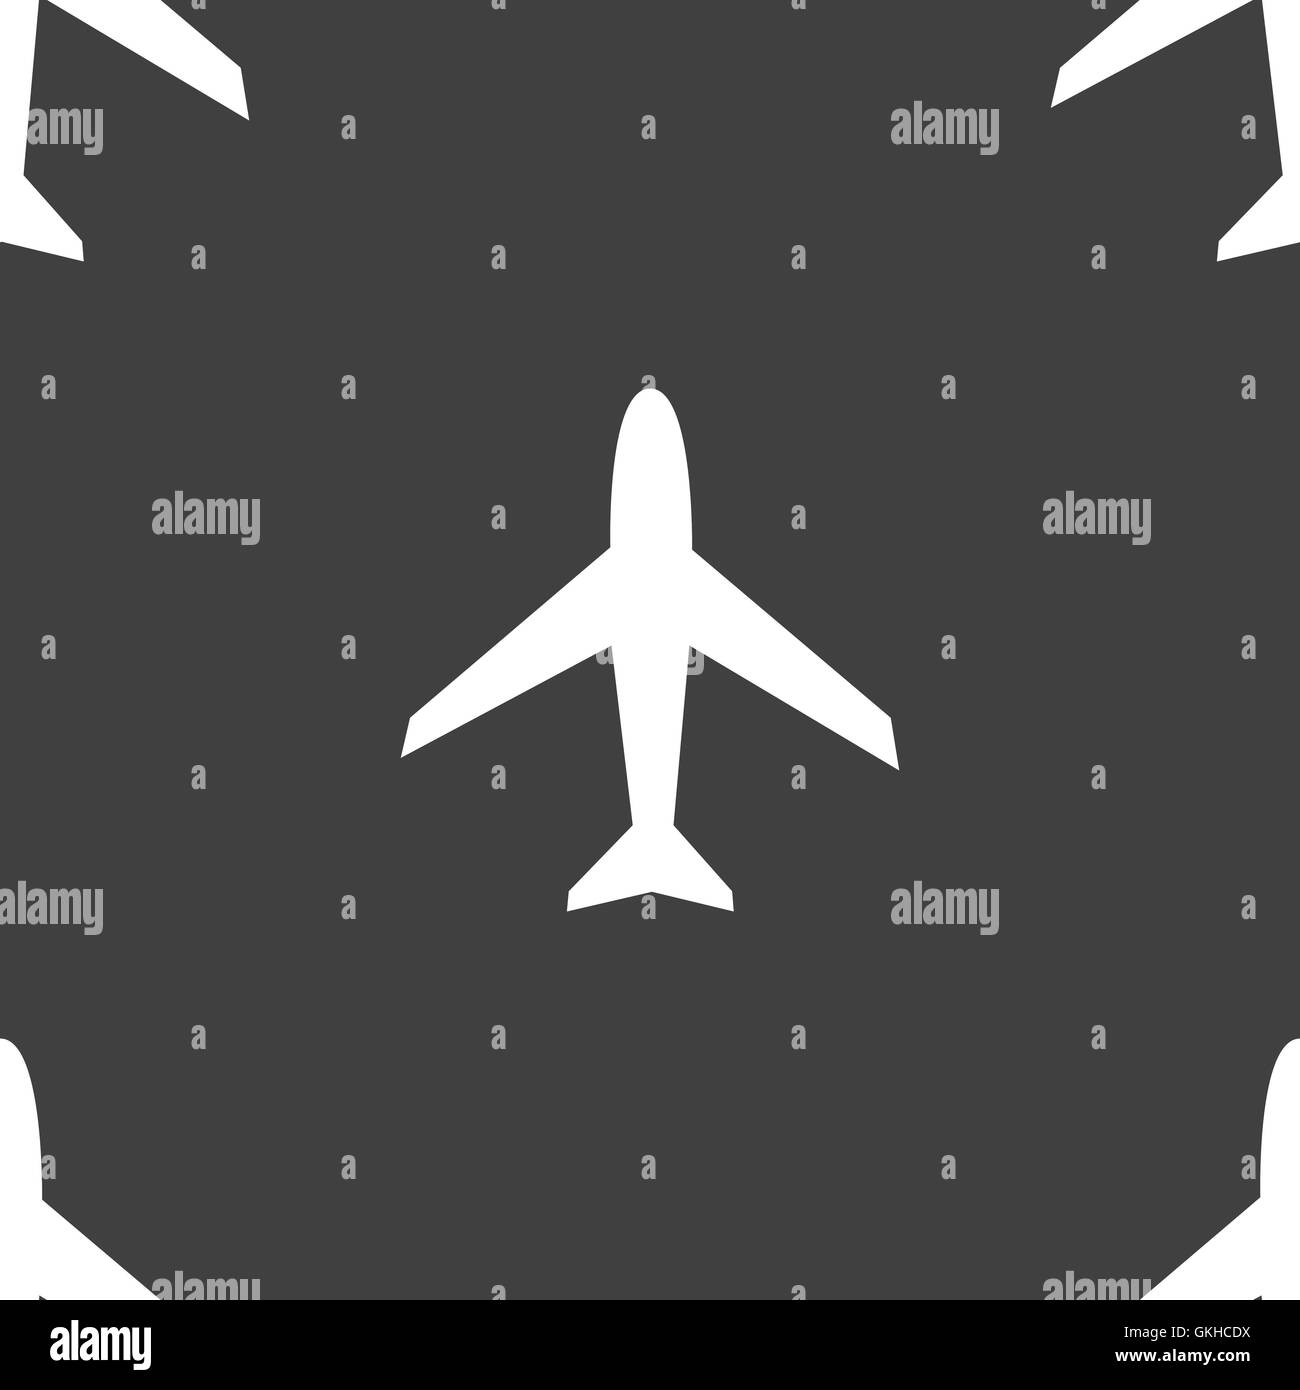 Plane web icon. flat design. Seamless pattern. Stock Vector